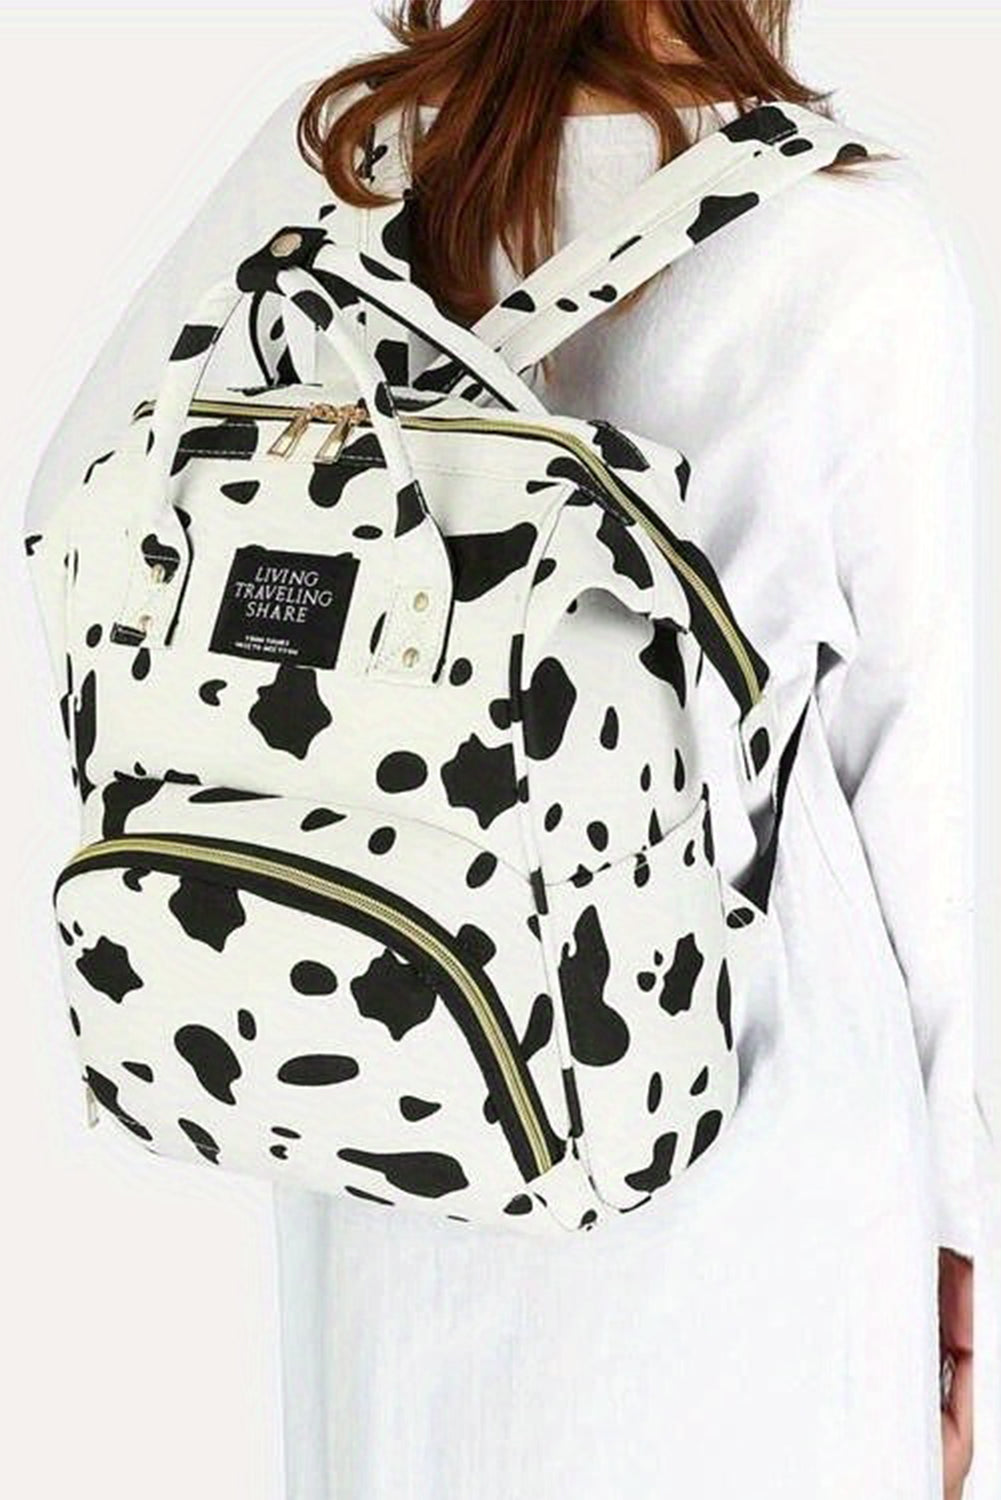 Cow Print Backpack